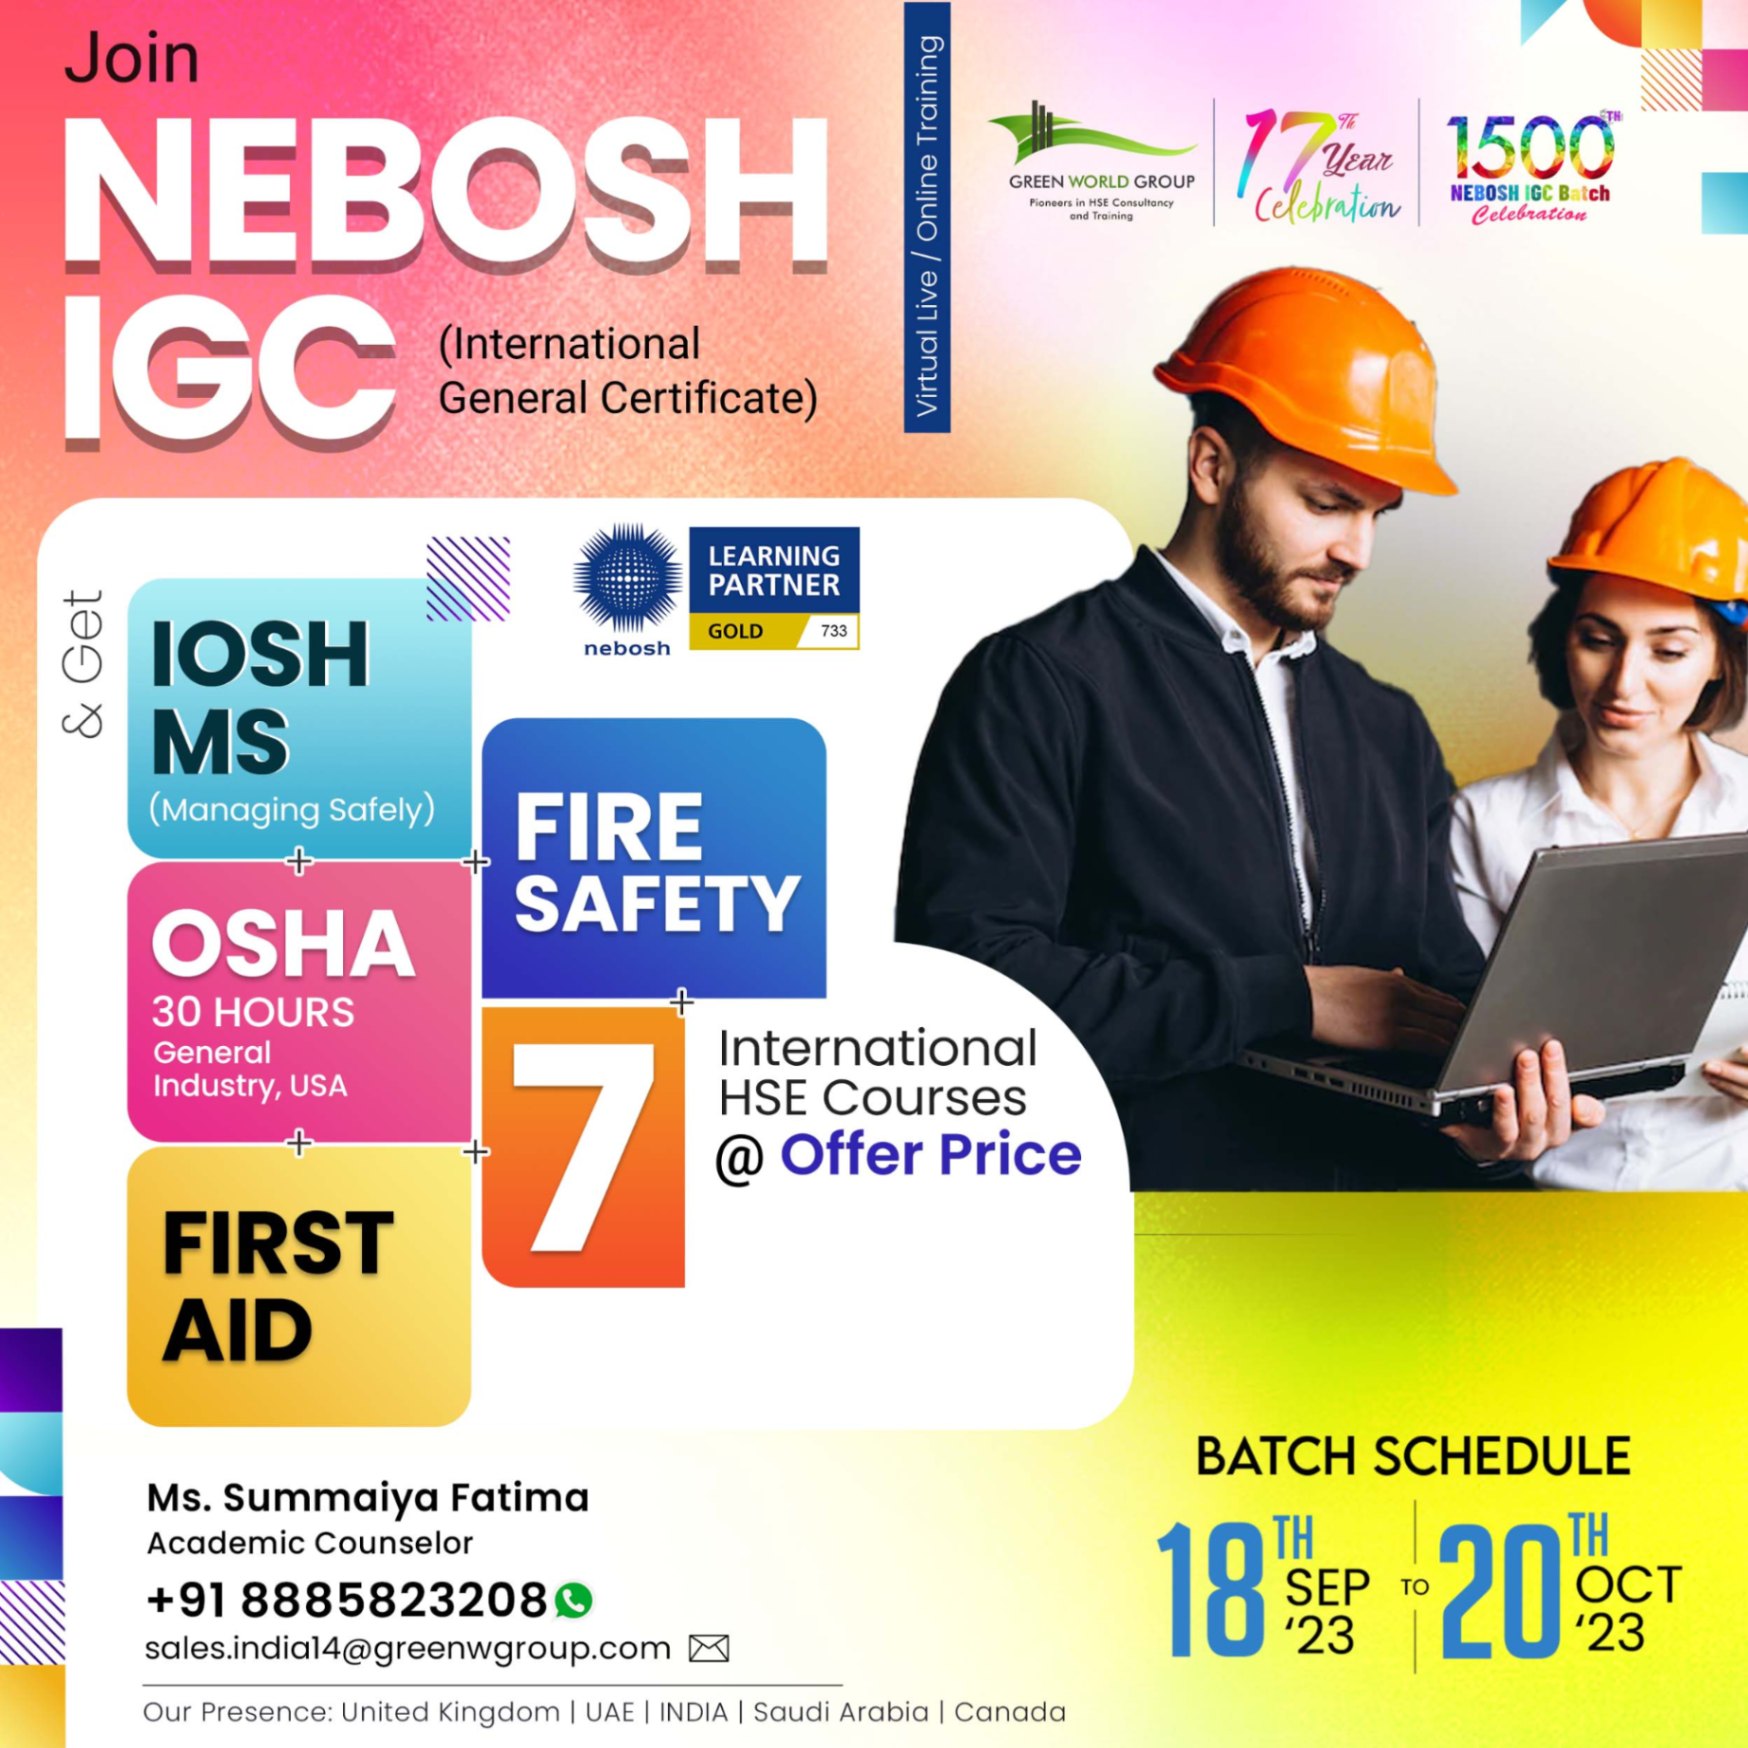 Taking up NEBOSH IGC Course in Hyderabad!